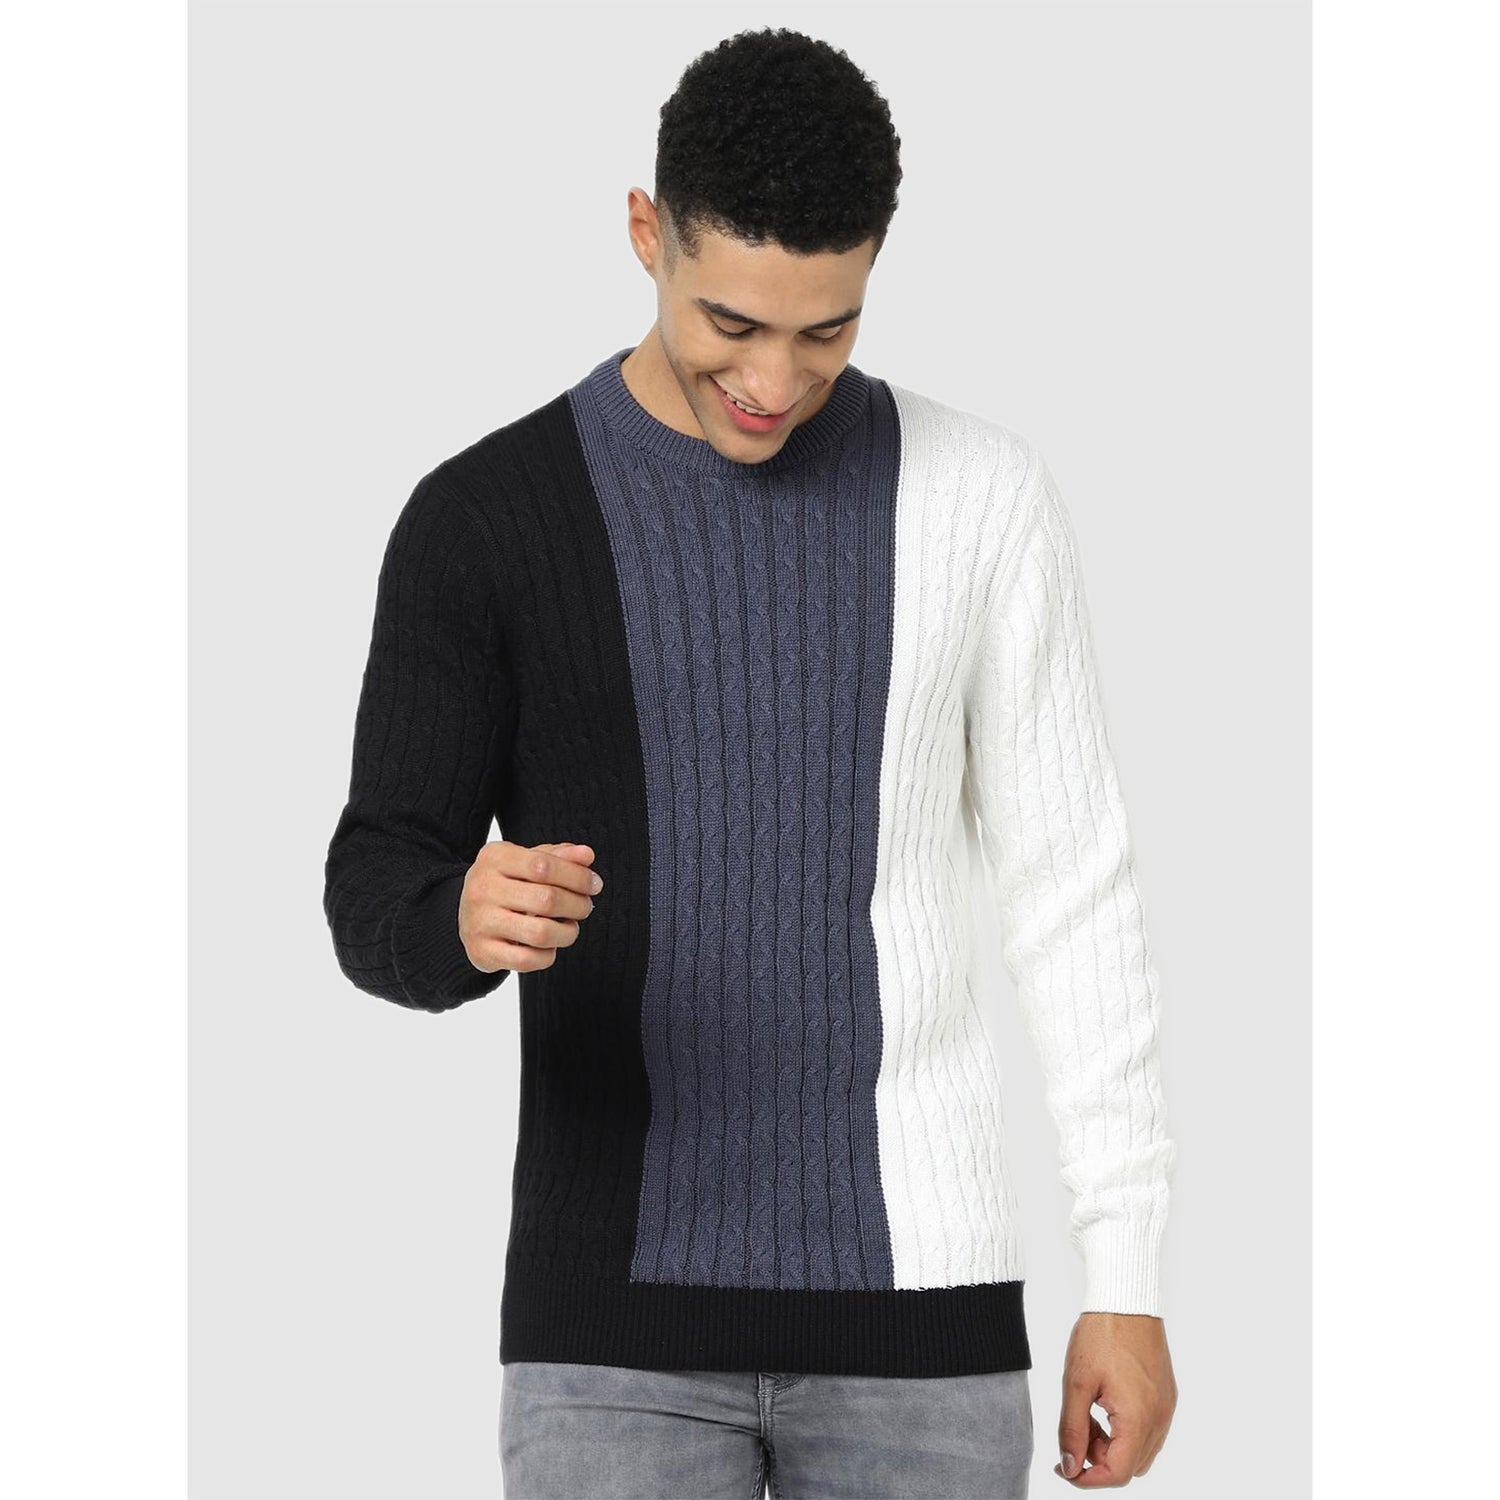 Black Vertical Regular Fit Stripes Sweater (Various Sizes)